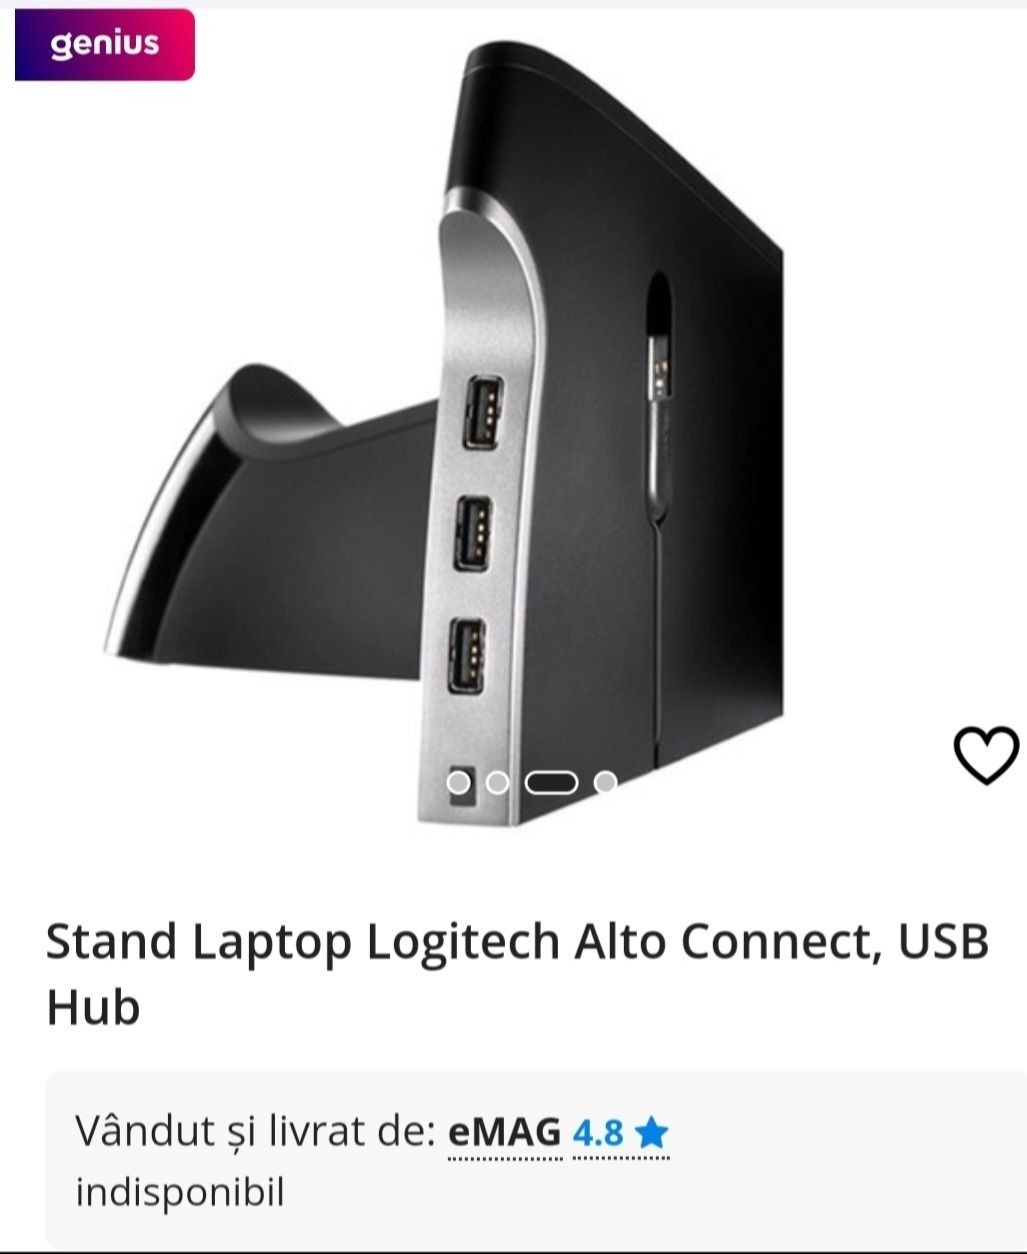 Stand laptop Logitech Alto Connect Usb hub